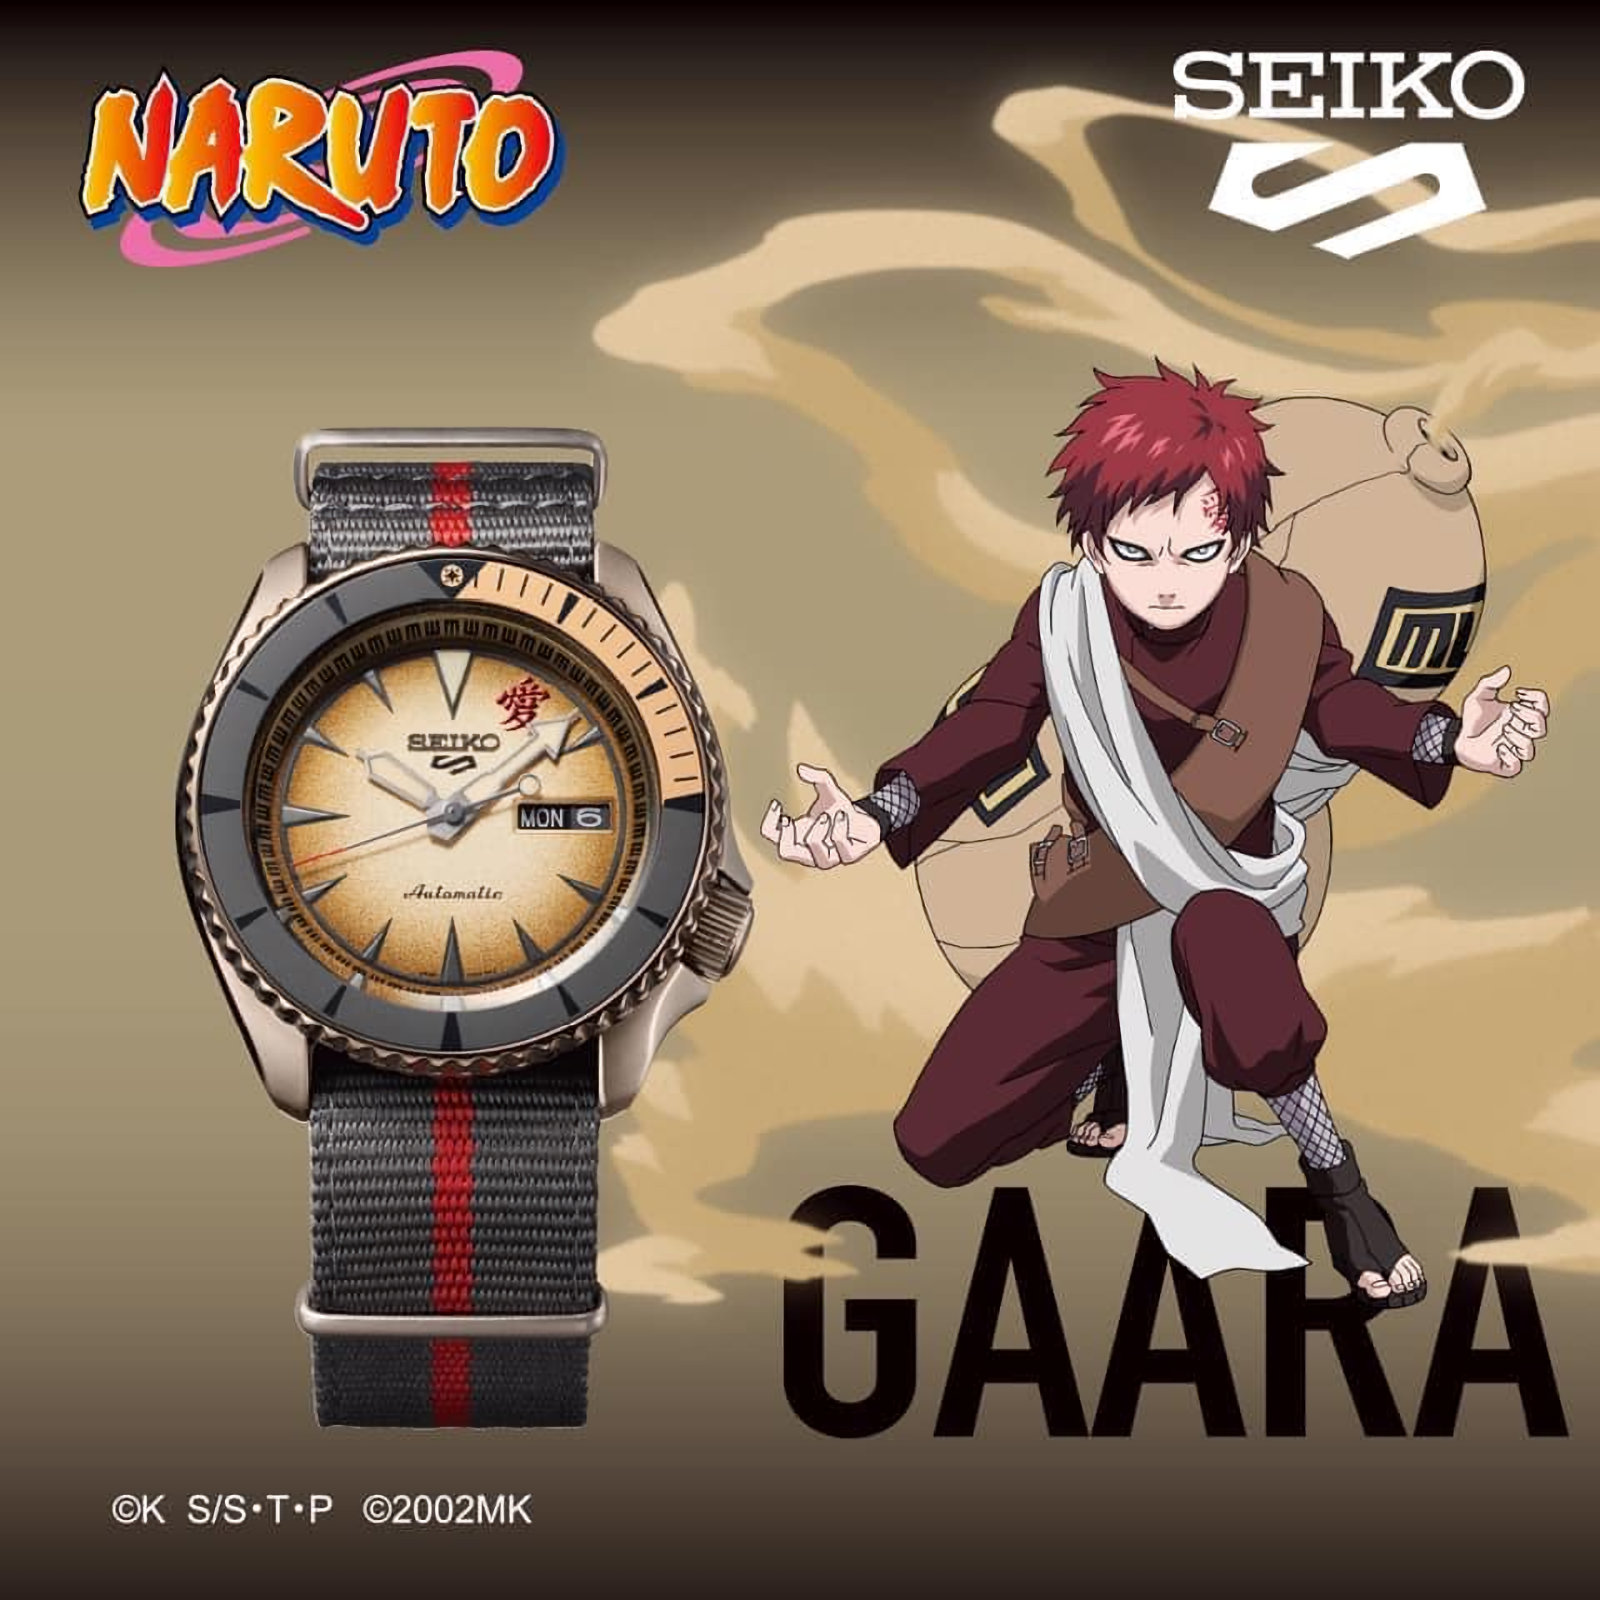 Seiko 5 Sports Naruto Boruto Gaara Model Limited Edition Men S Watch Srpf71k1 Ebay